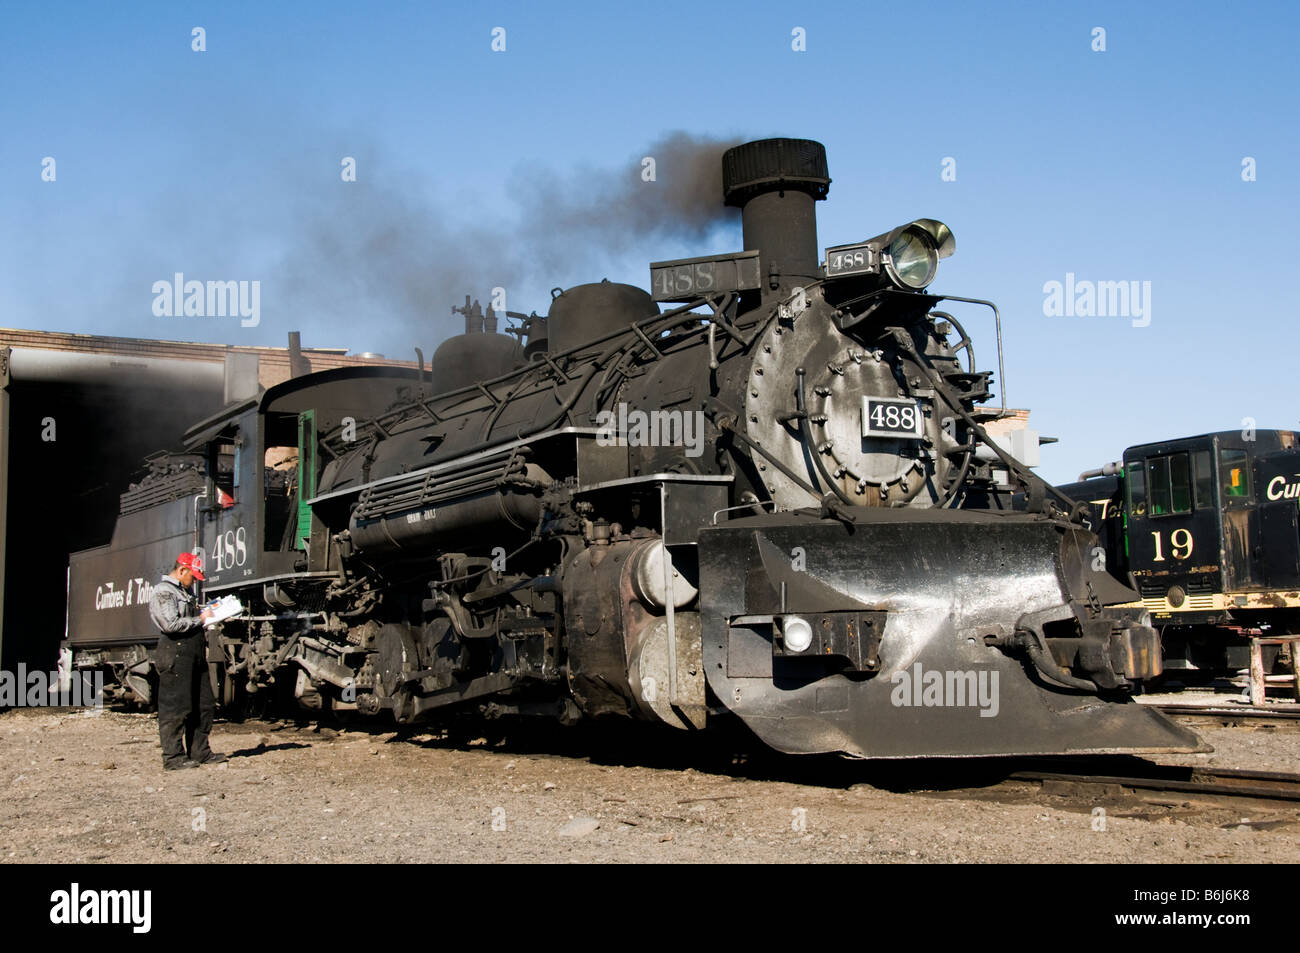 Old fashioned vintage locomotive train engine moving on tracks Stock ...